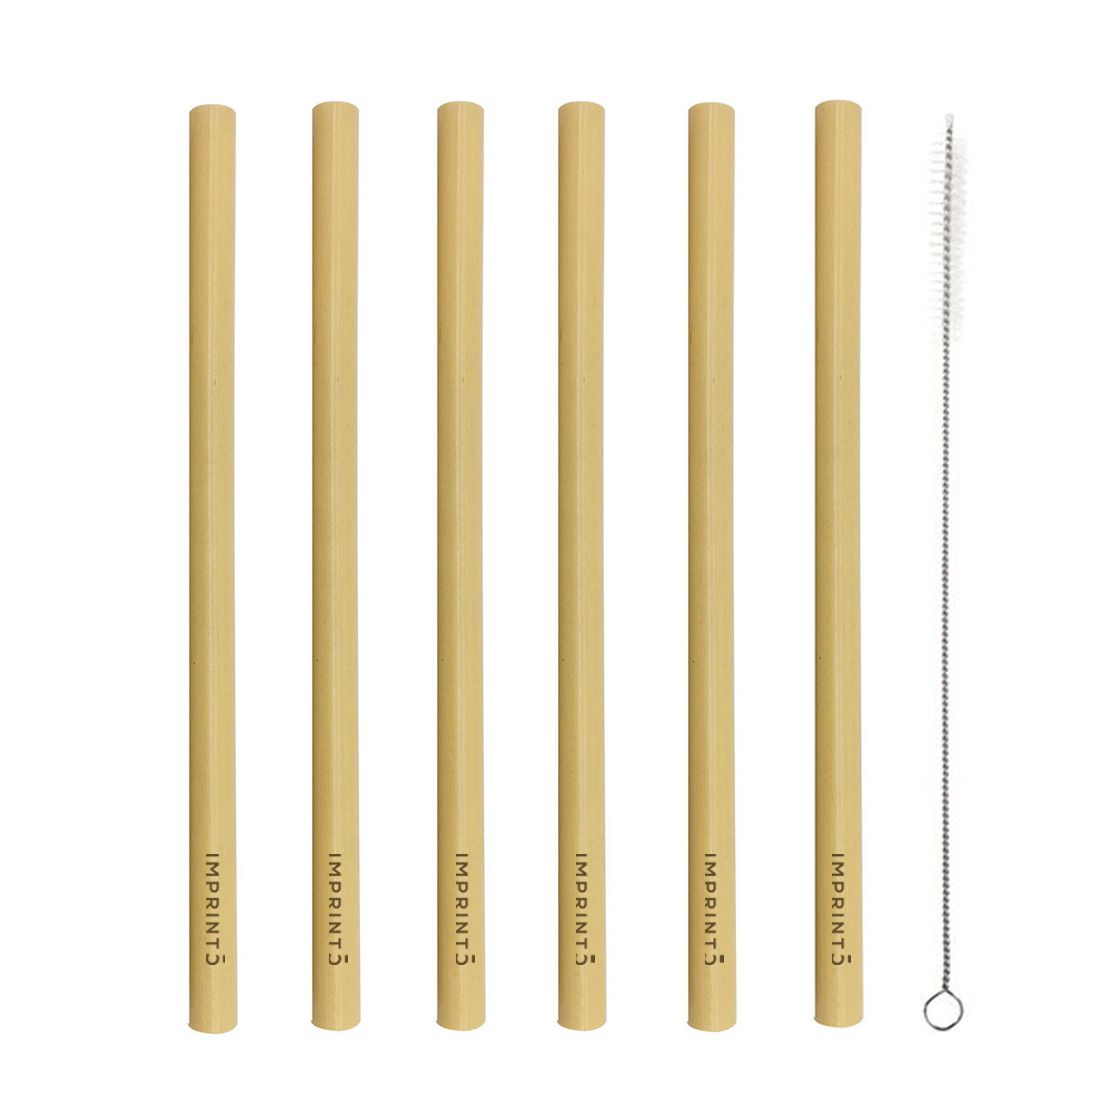 Kit de pajitas de bambú reutilizables personalizadas de 6 piezas